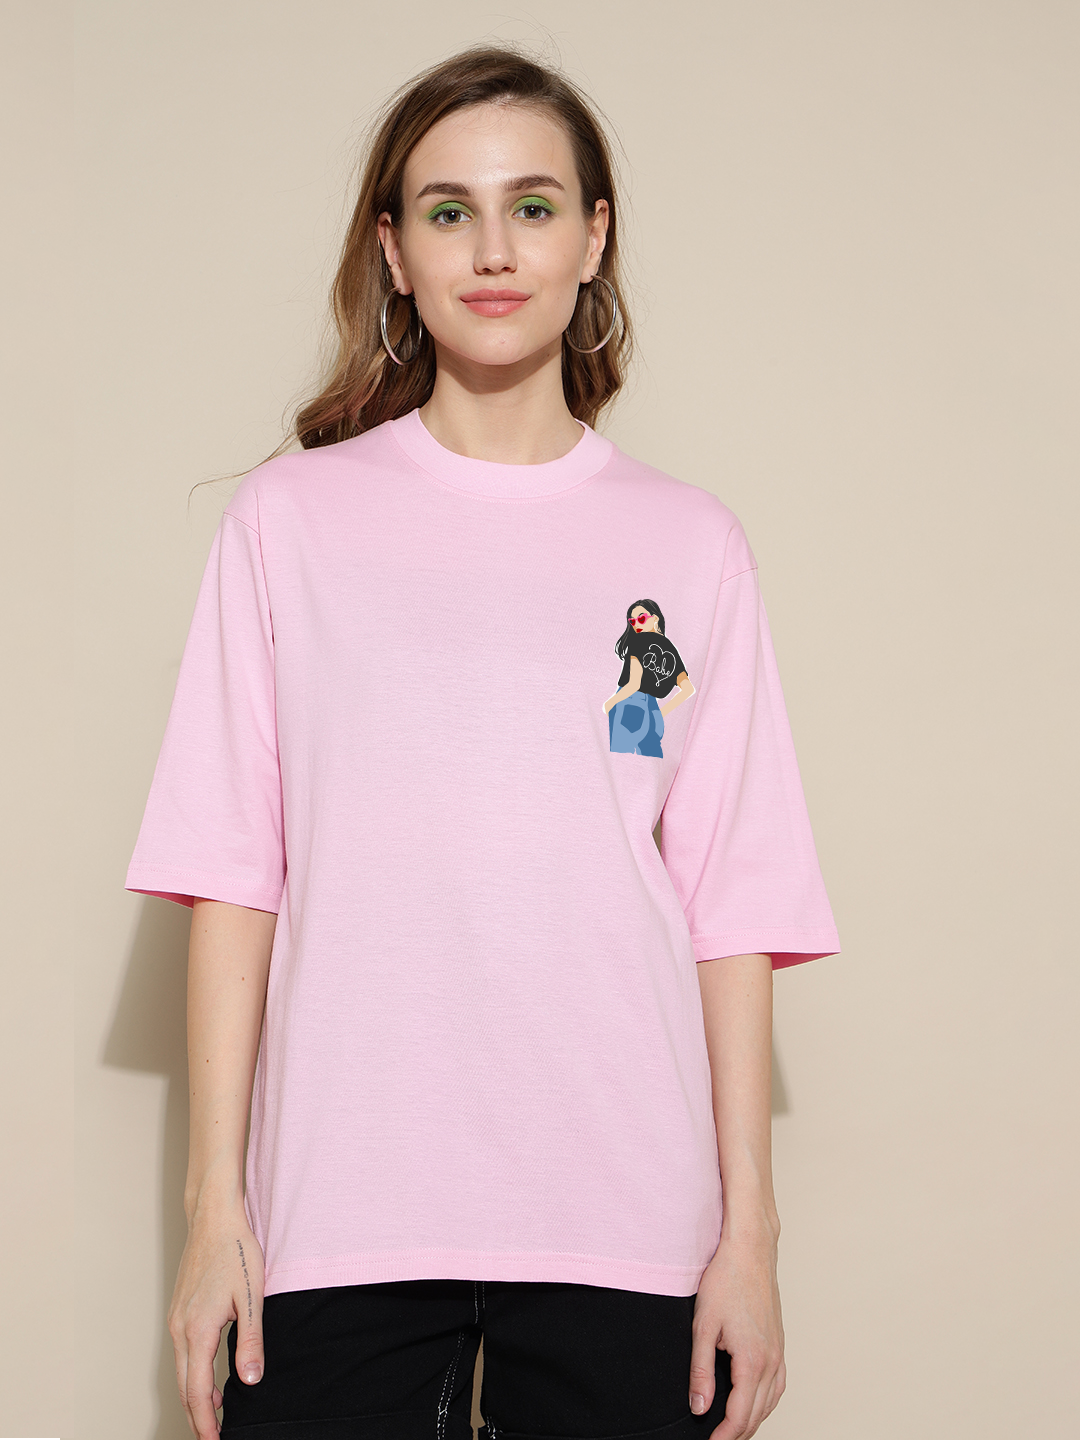 Call me Pink Oversized Unisex T-shirt